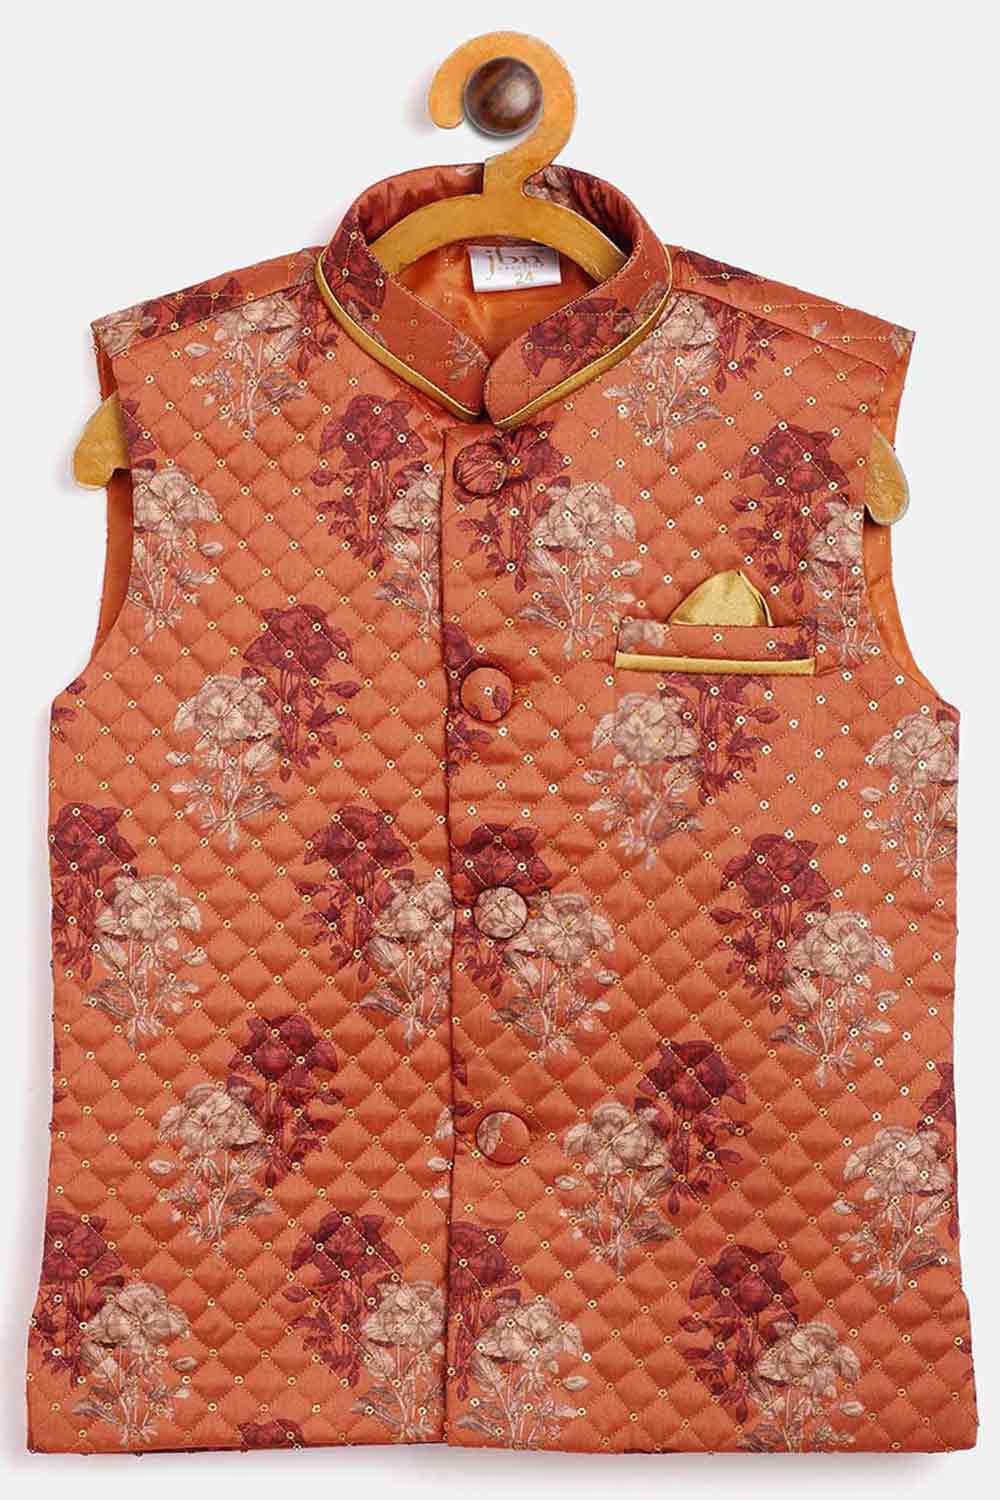 Bellisimo Fashon Men's Luxury Embroidered Nehru Jacket Vests - Walmart.com